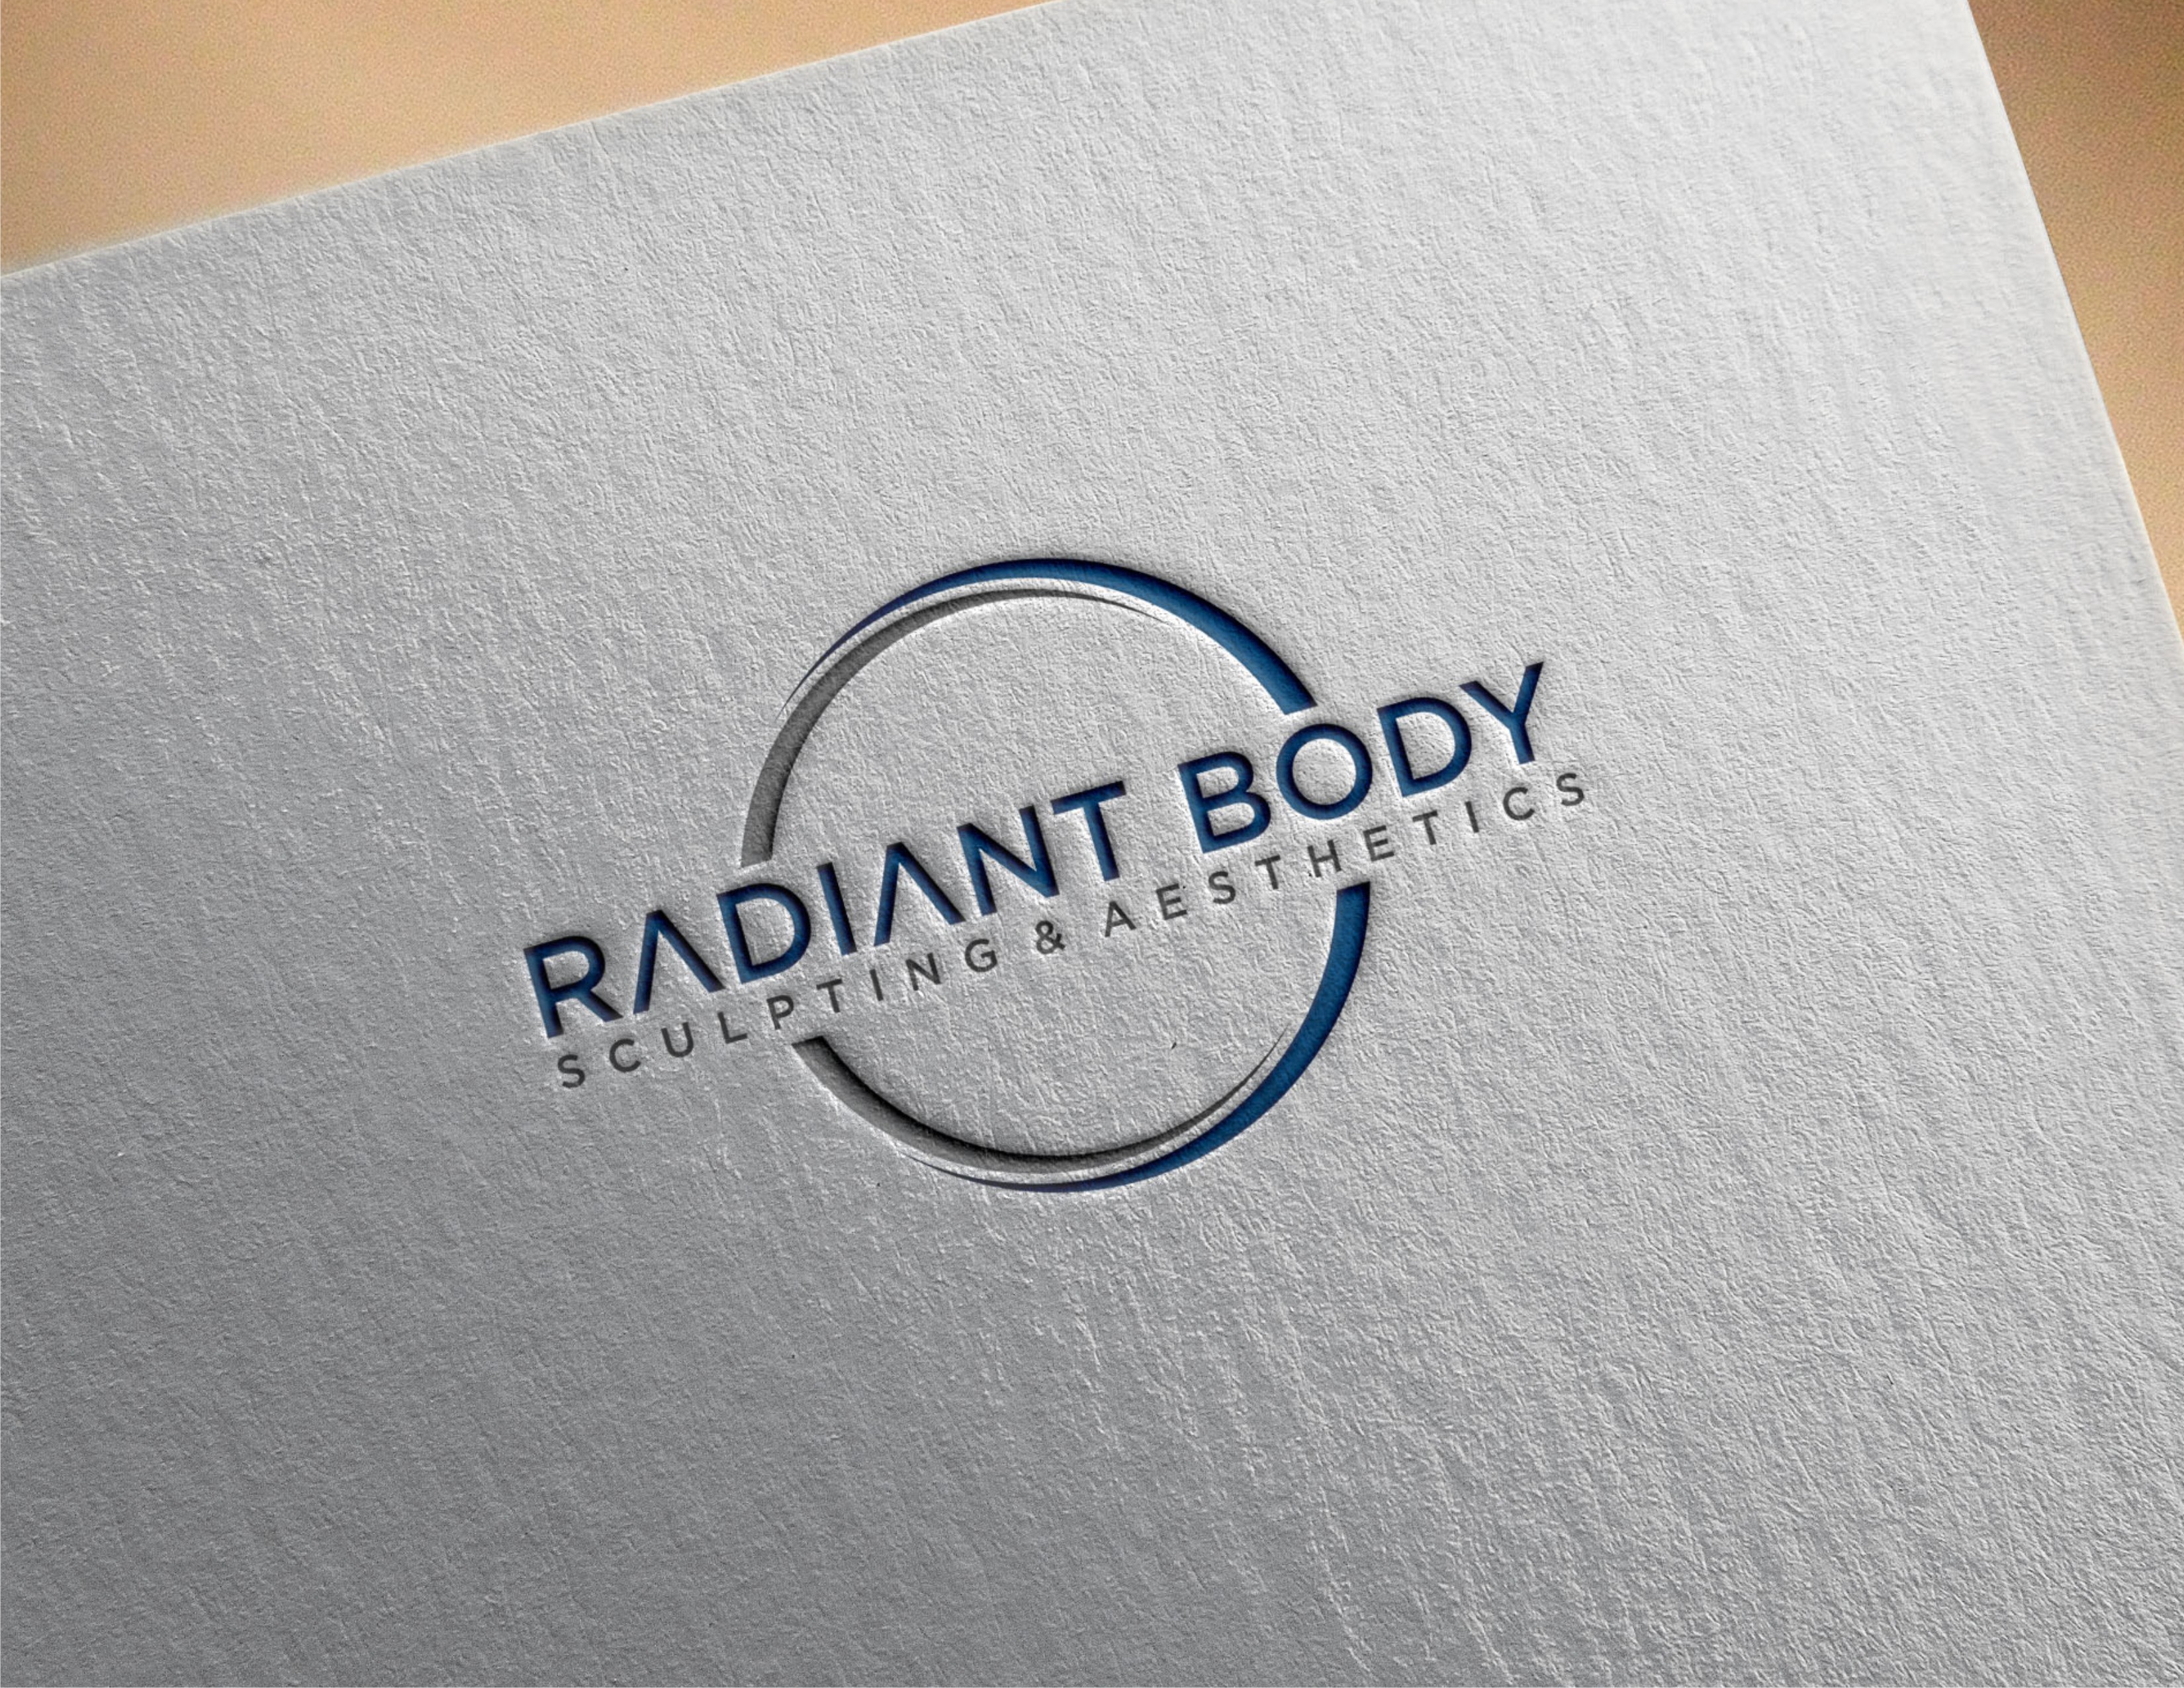 Radiant Energy Logo Design